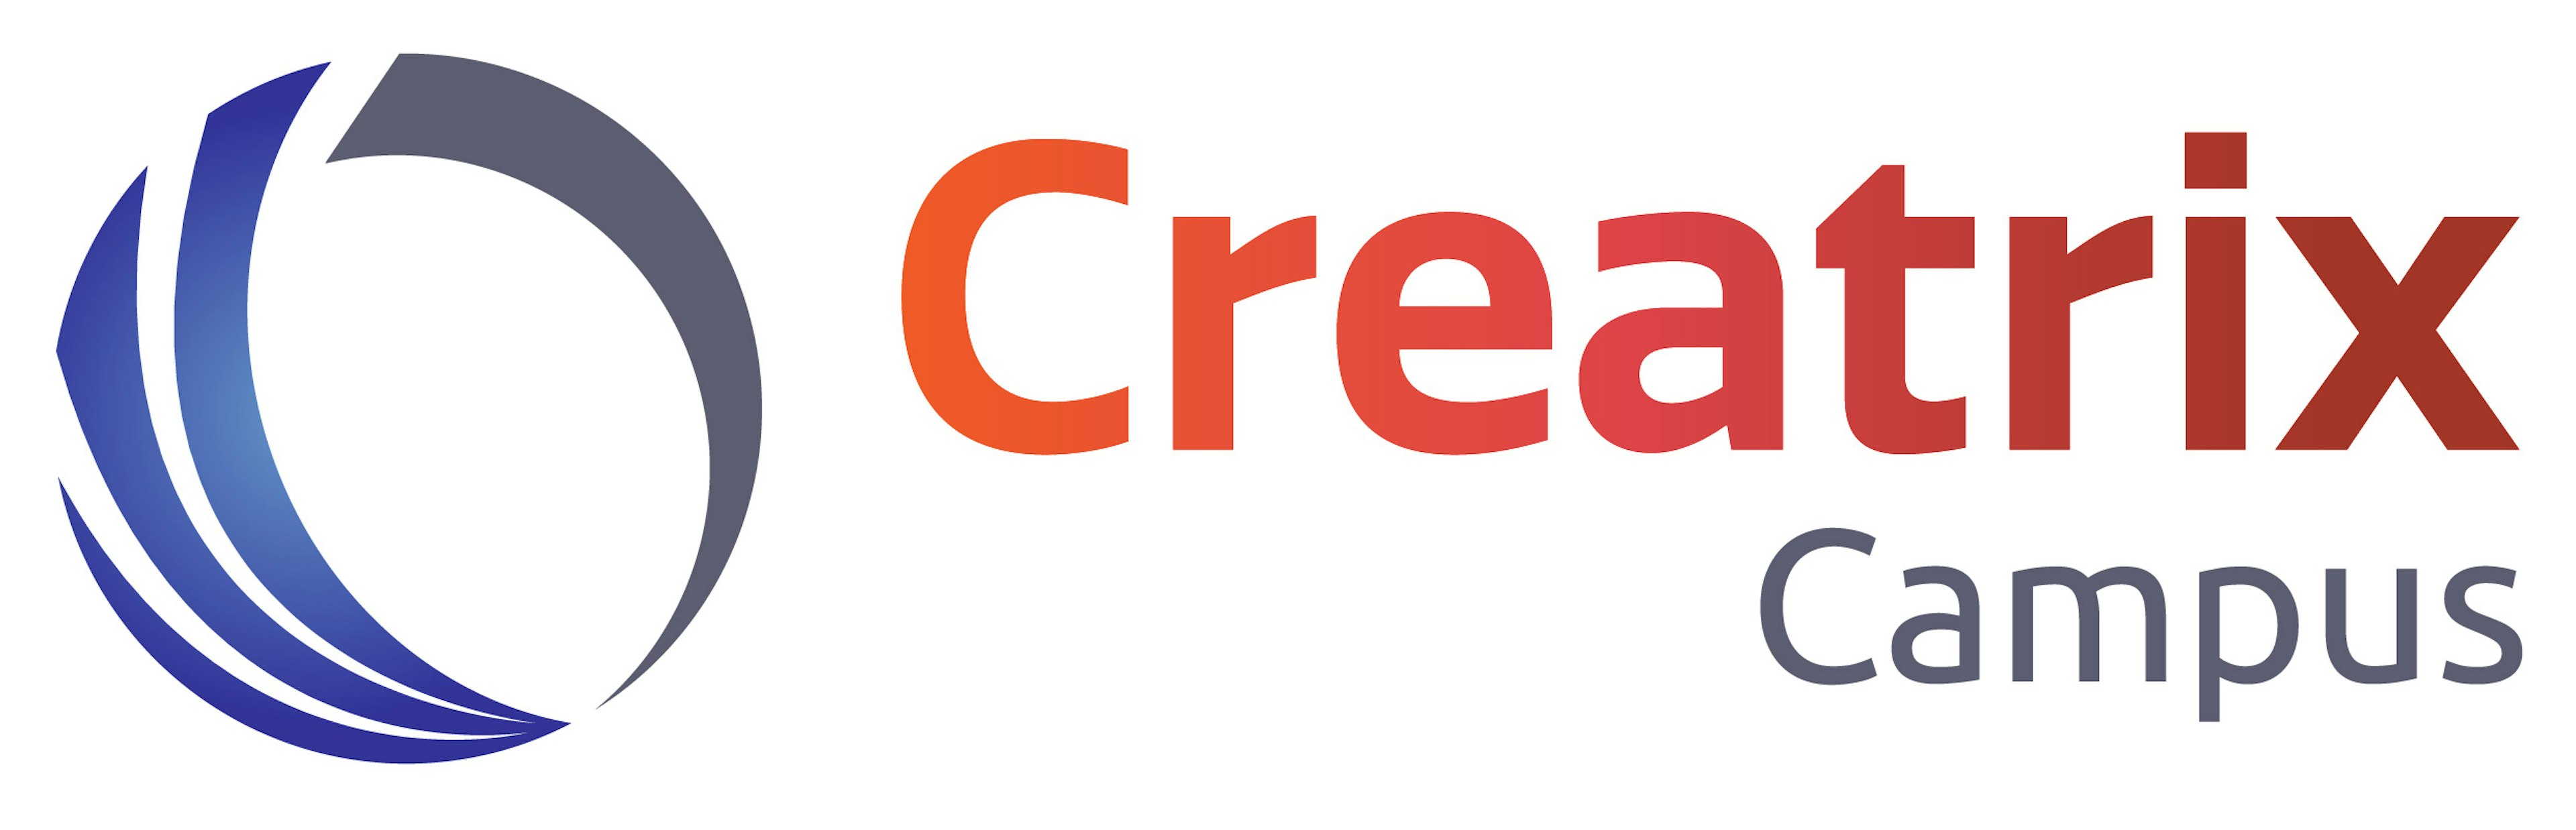 Creatrix Campus Logo